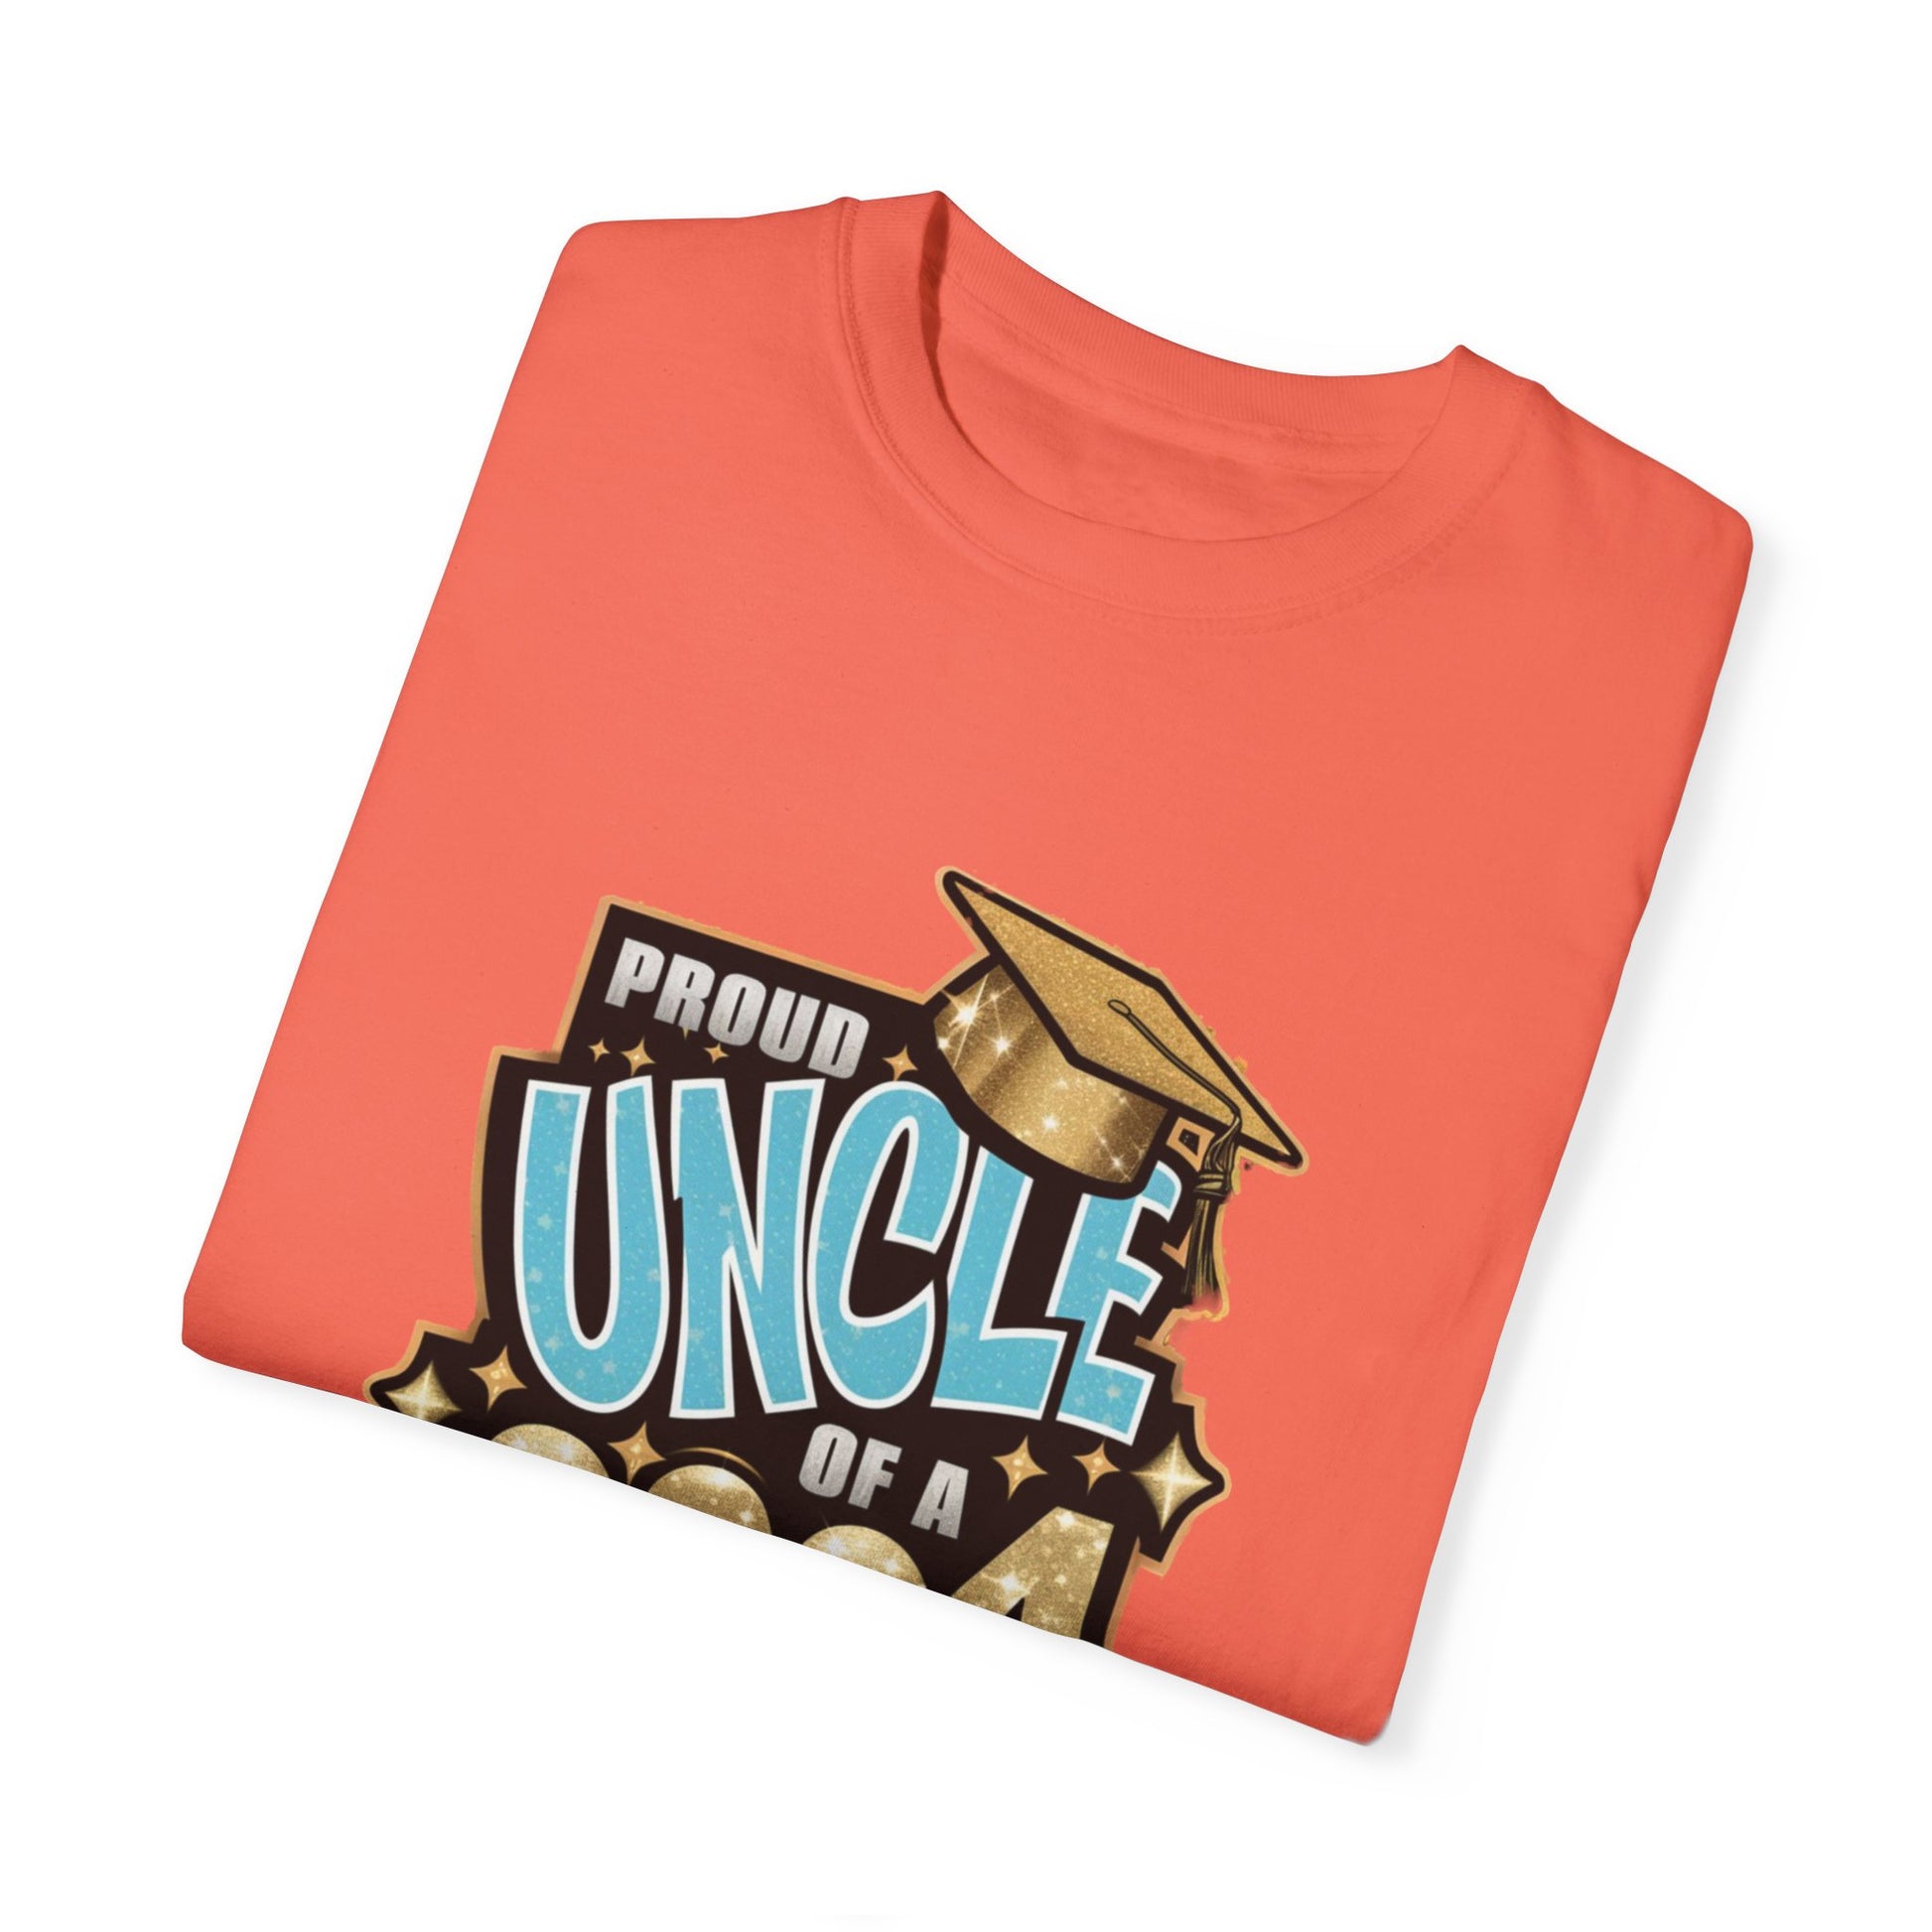 Proud Uncle of a 2024 Graduate Unisex Garment-dyed T-shirt Cotton Funny Humorous Graphic Soft Premium Unisex Men Women Bright Salmon T-shirt Birthday Gift-32